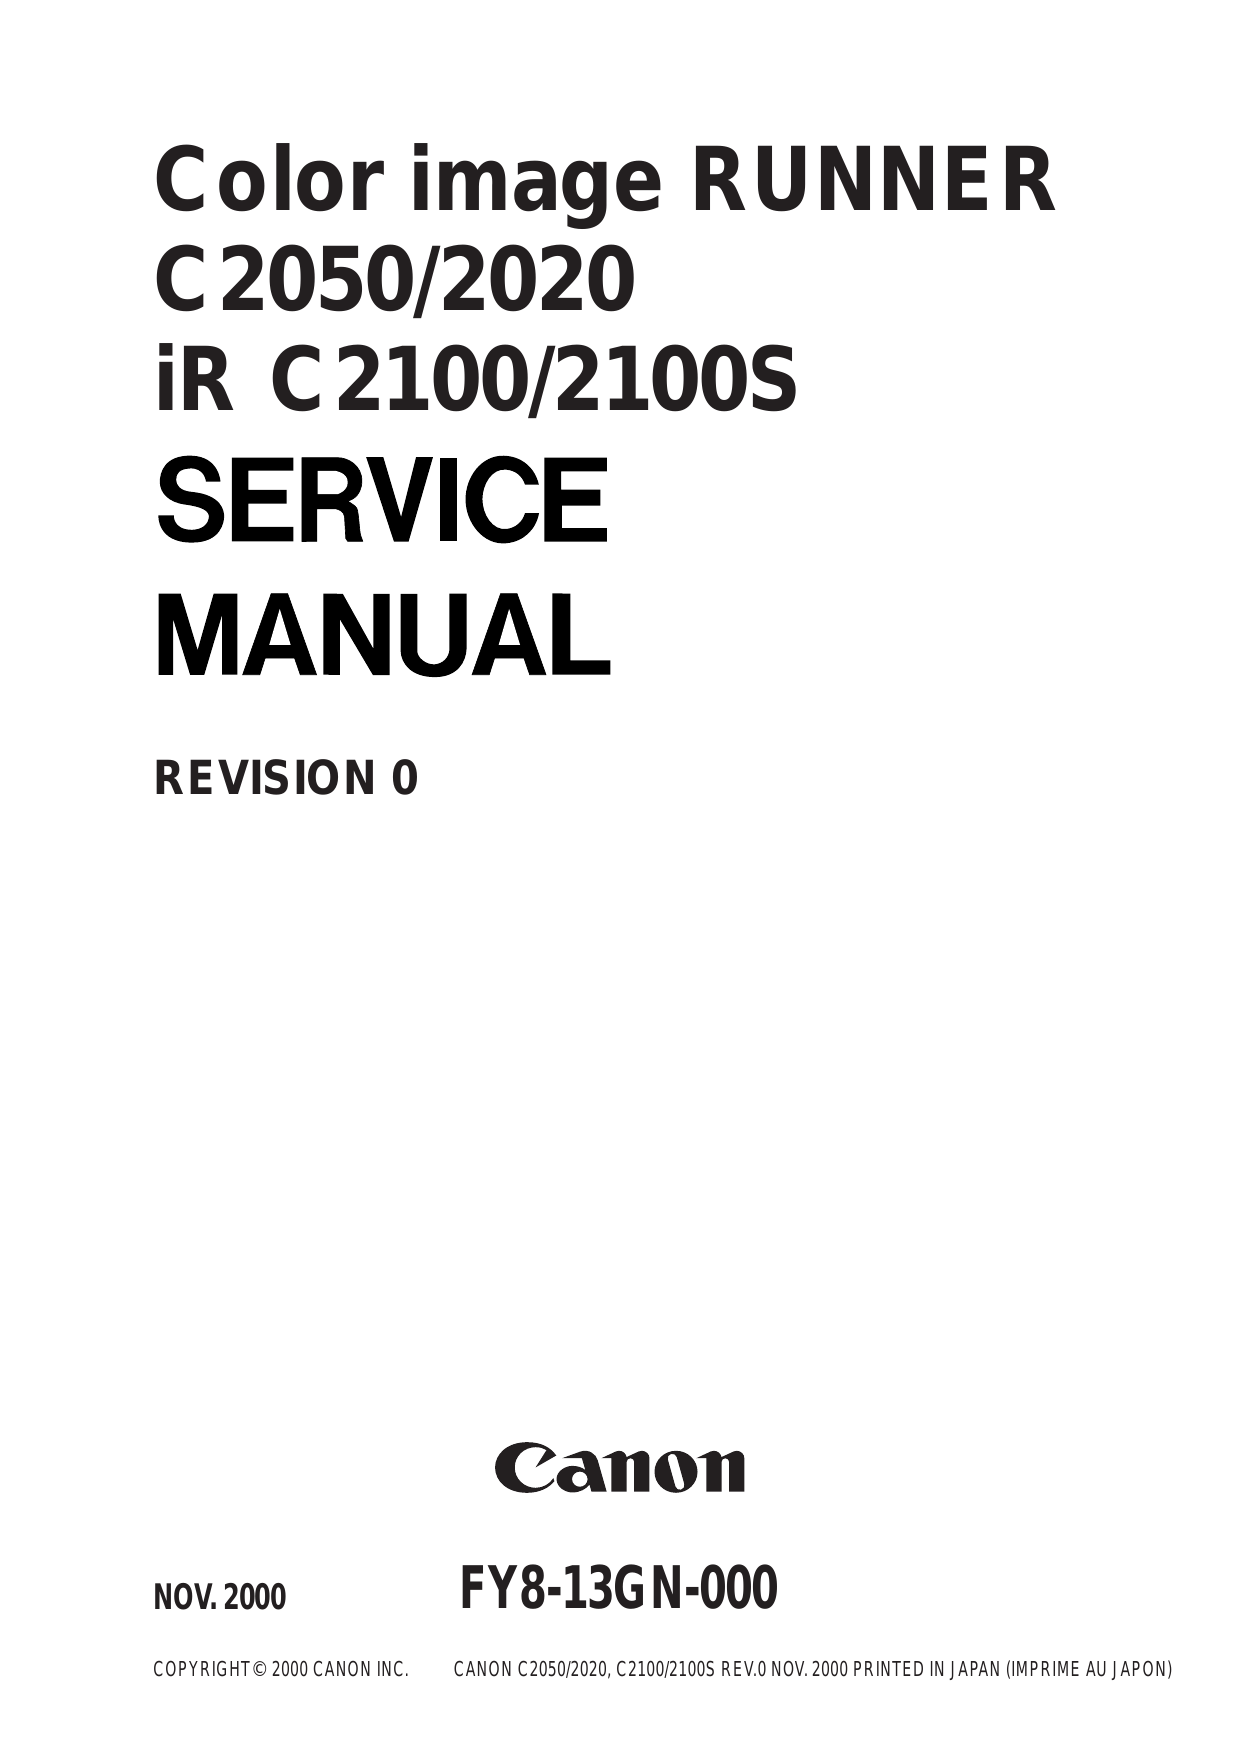 Canon Color image Runner C2020, C2050, IRC2100 copier service manual Preview image 1